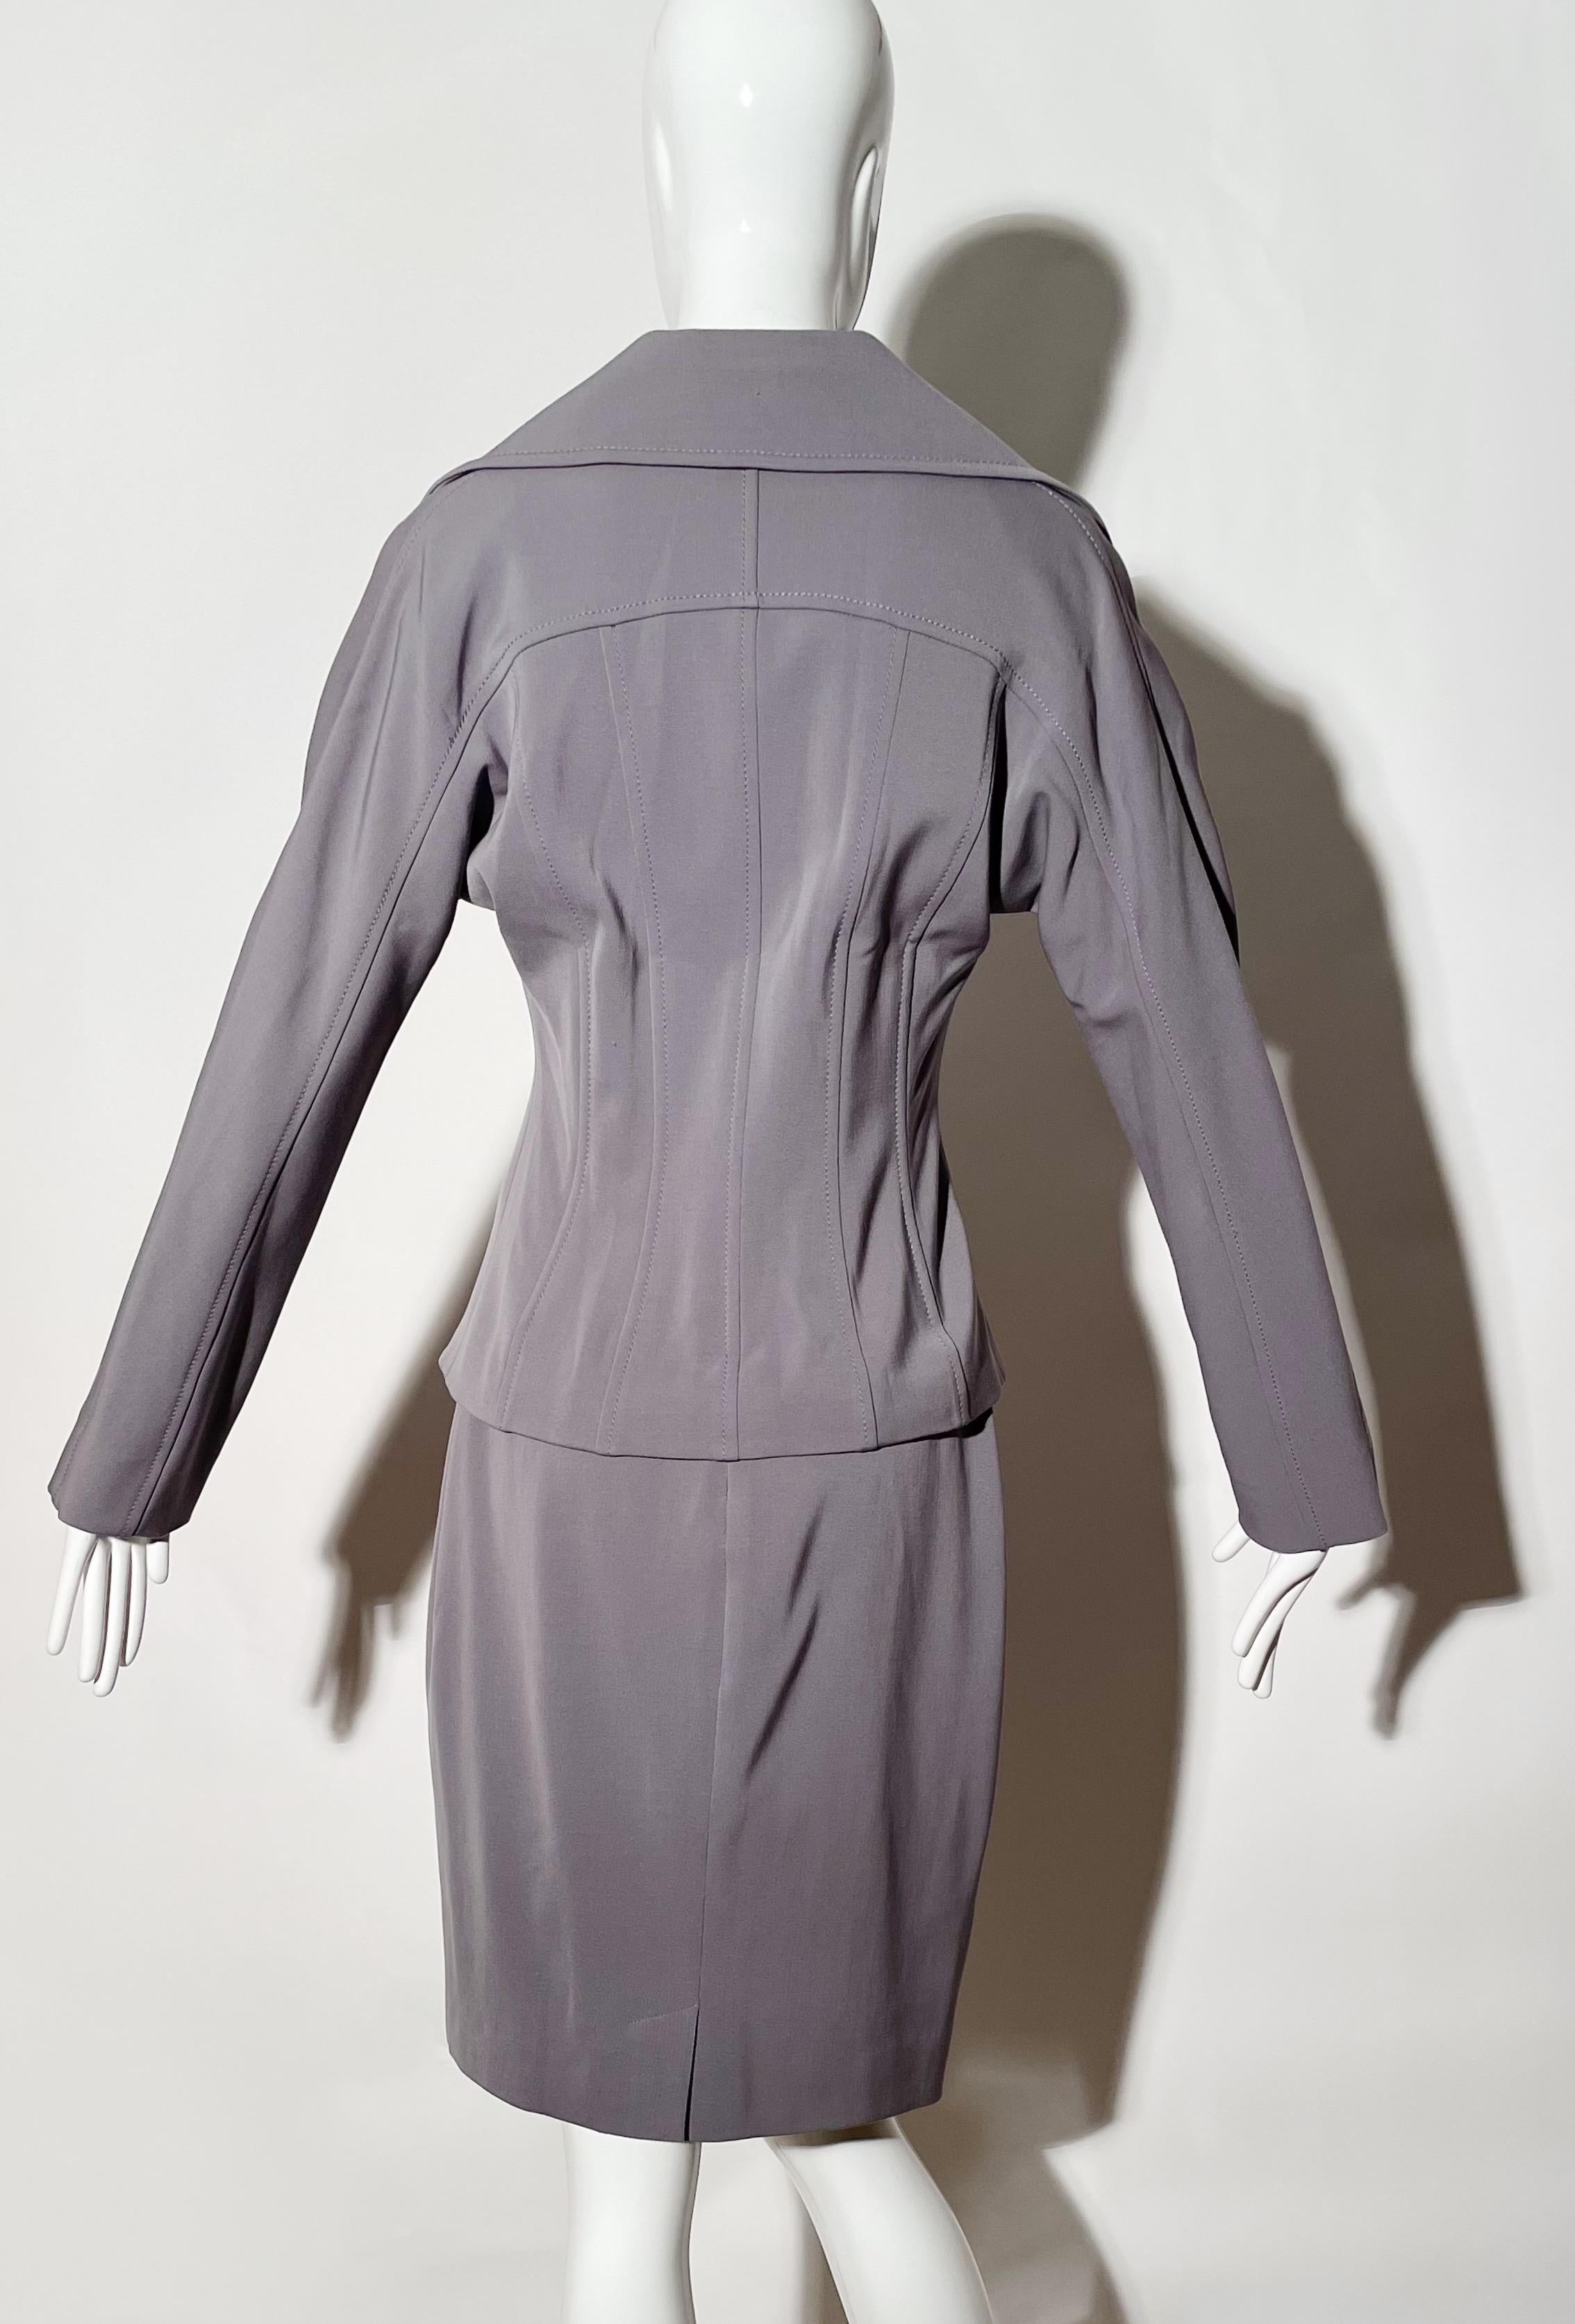 Dolce & Gabbana Corset Skirt Suit For Sale 2